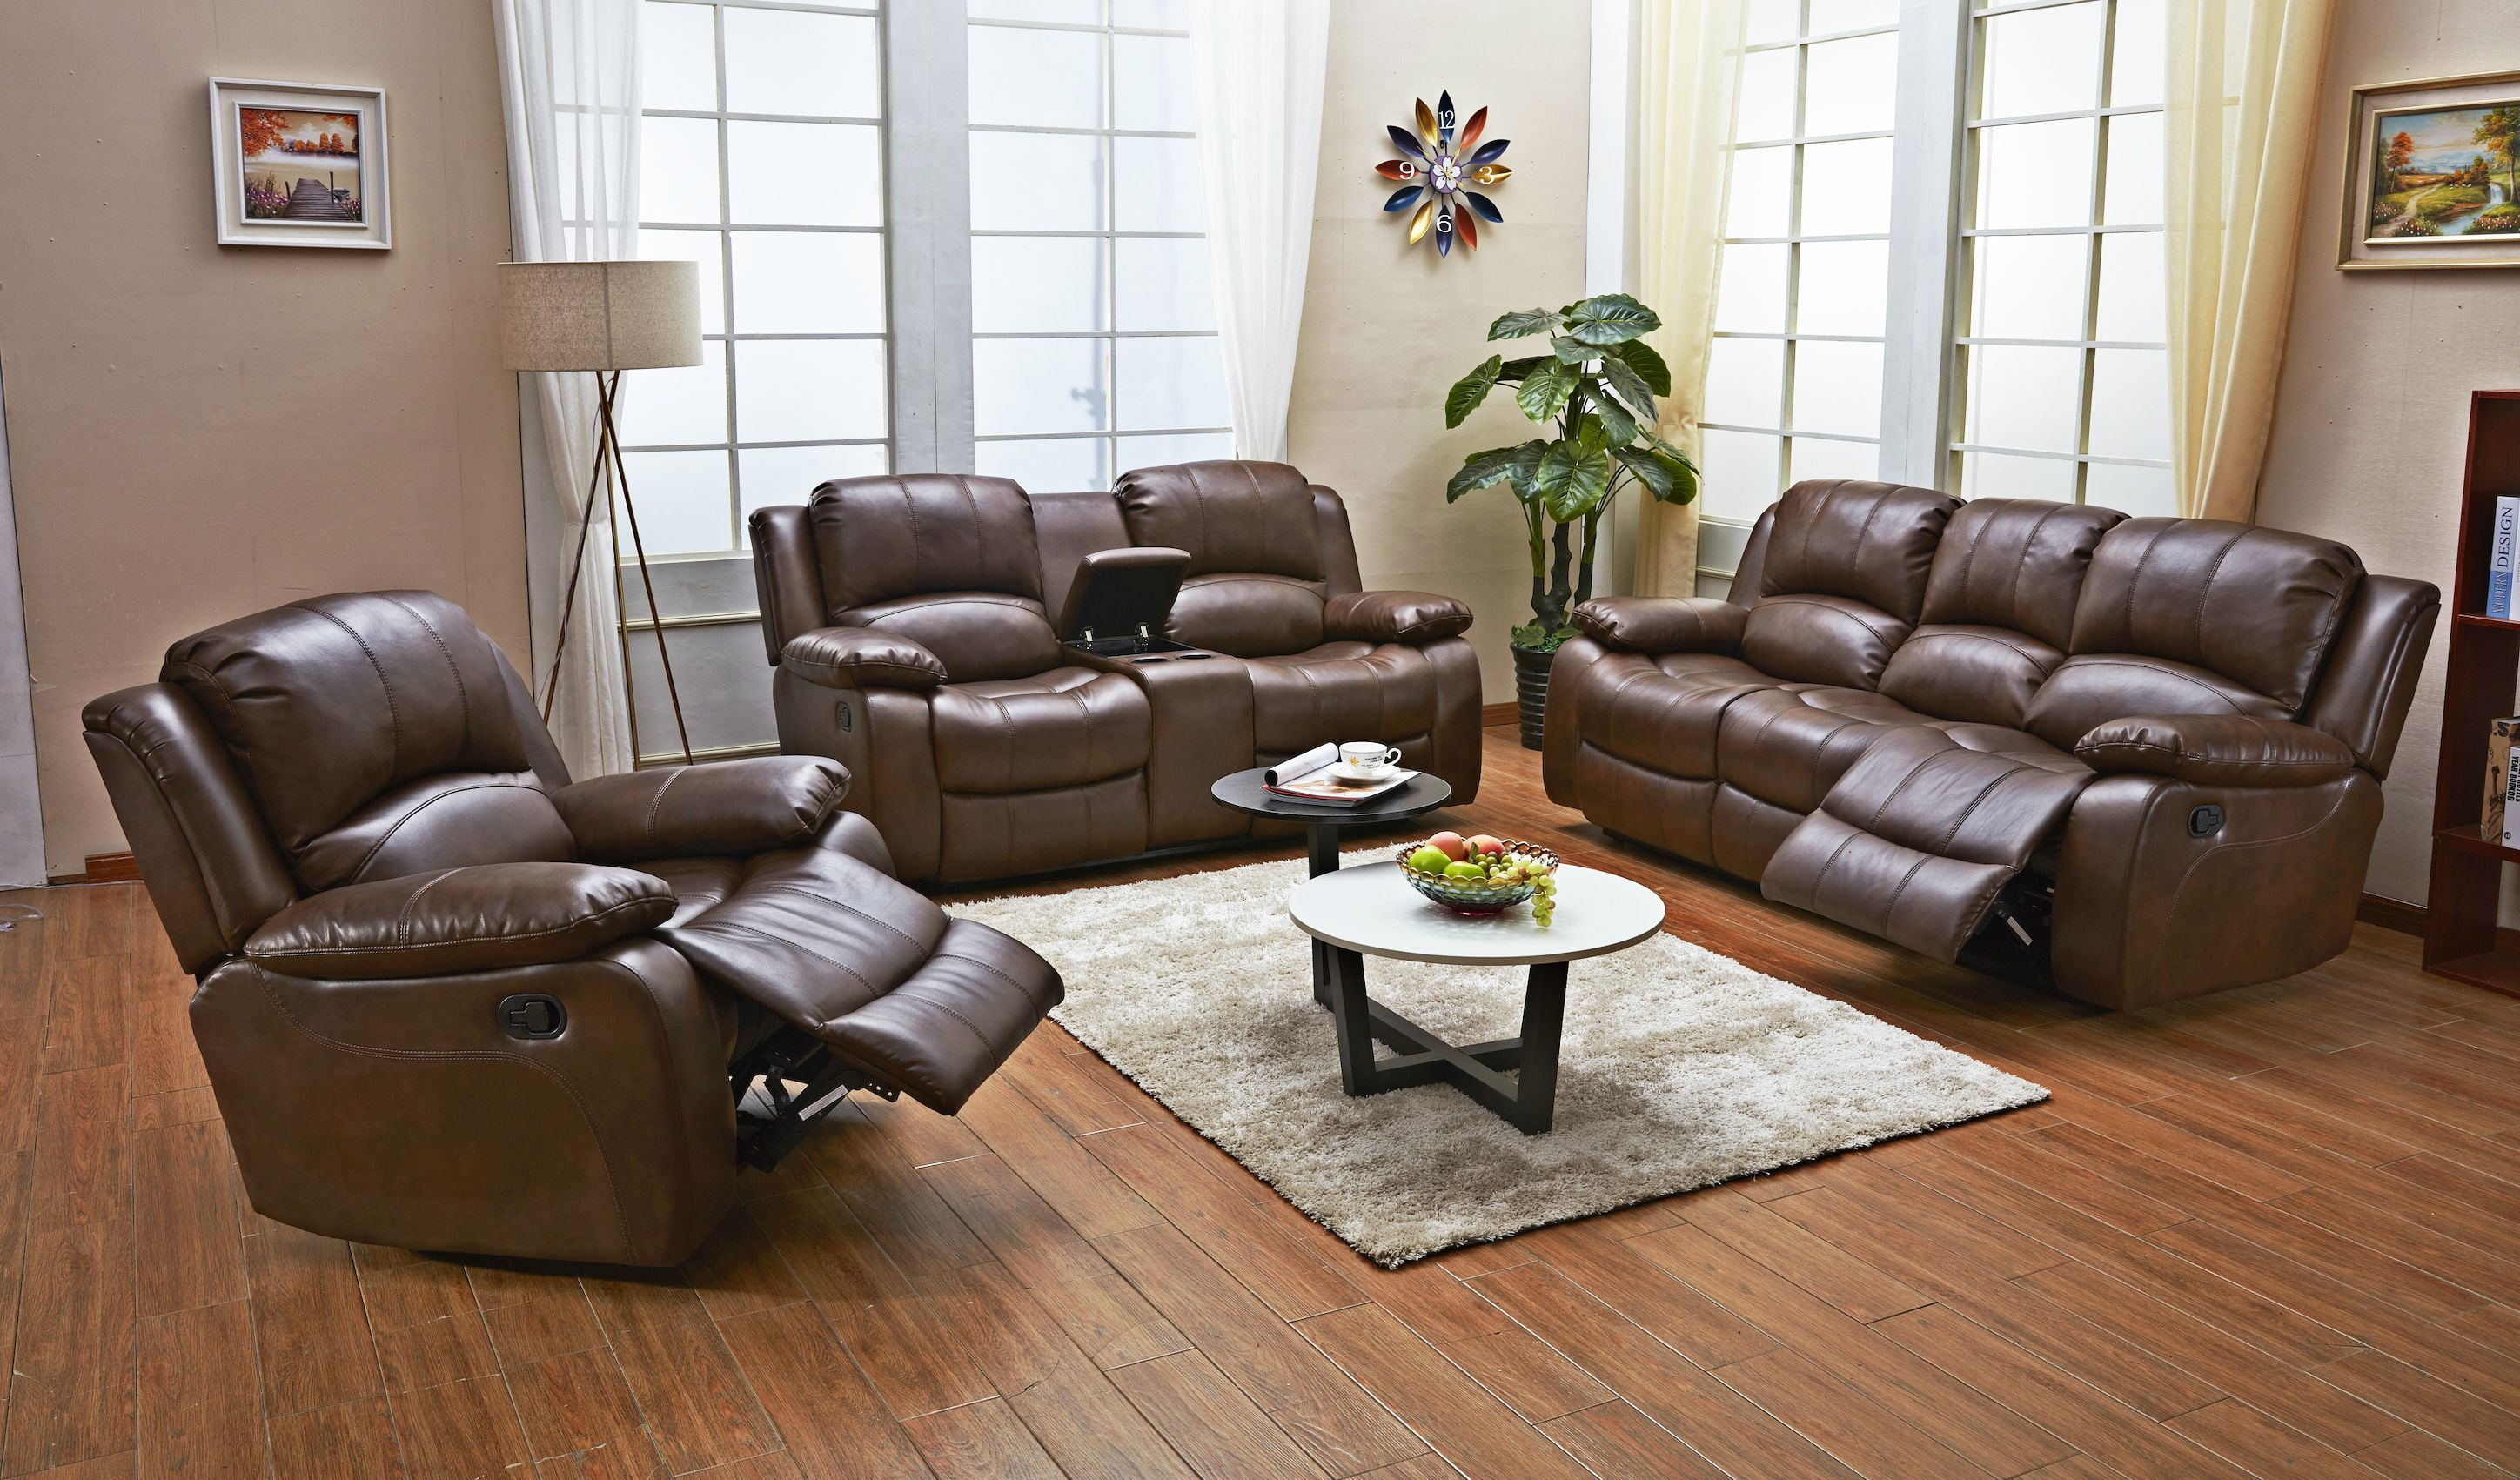 Loveseat 8018 Brown, Living Room Set 3+2 Sofa Betsy Furniture 2PC Bonded Leather Recliner Set Living Room Set 